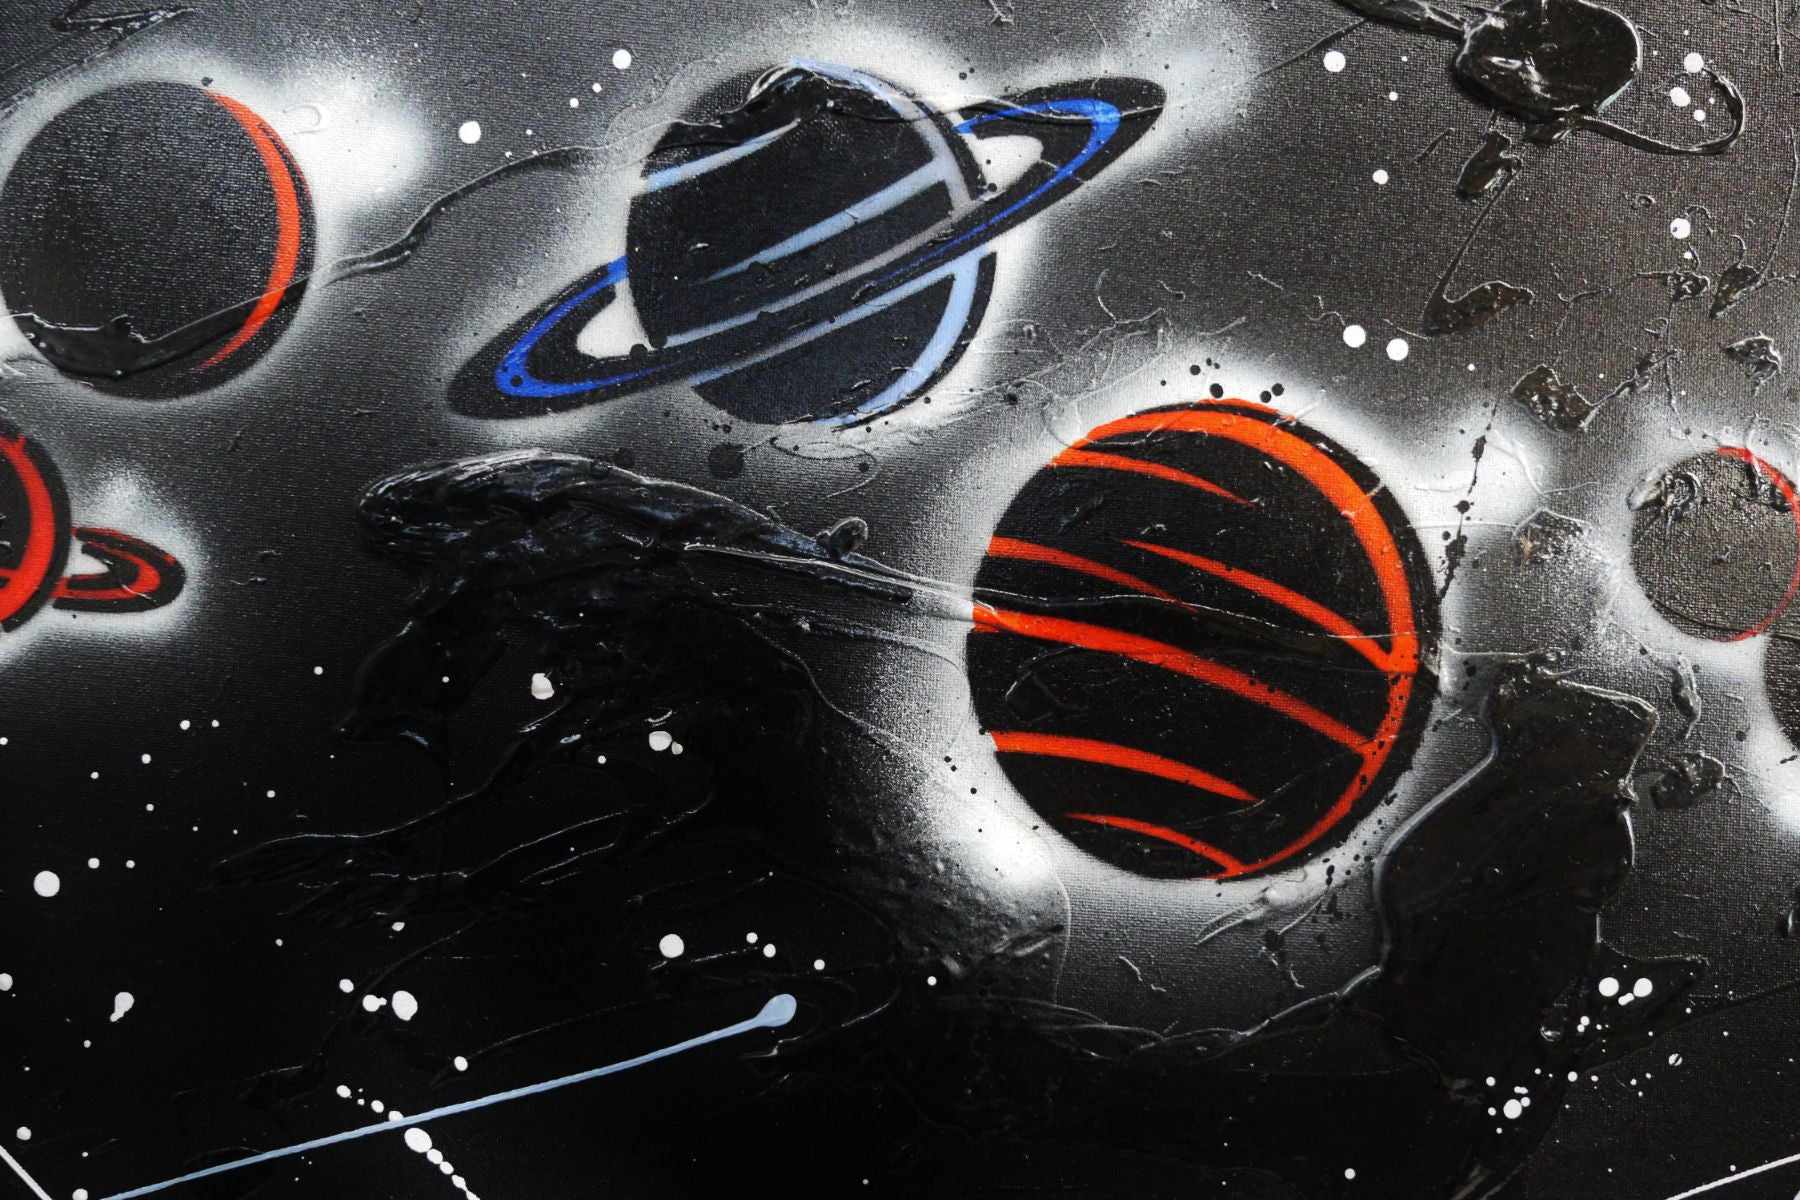 Little Bang Theory 160cm x 60cm Galaxy Textured Urban Pop Art Painting